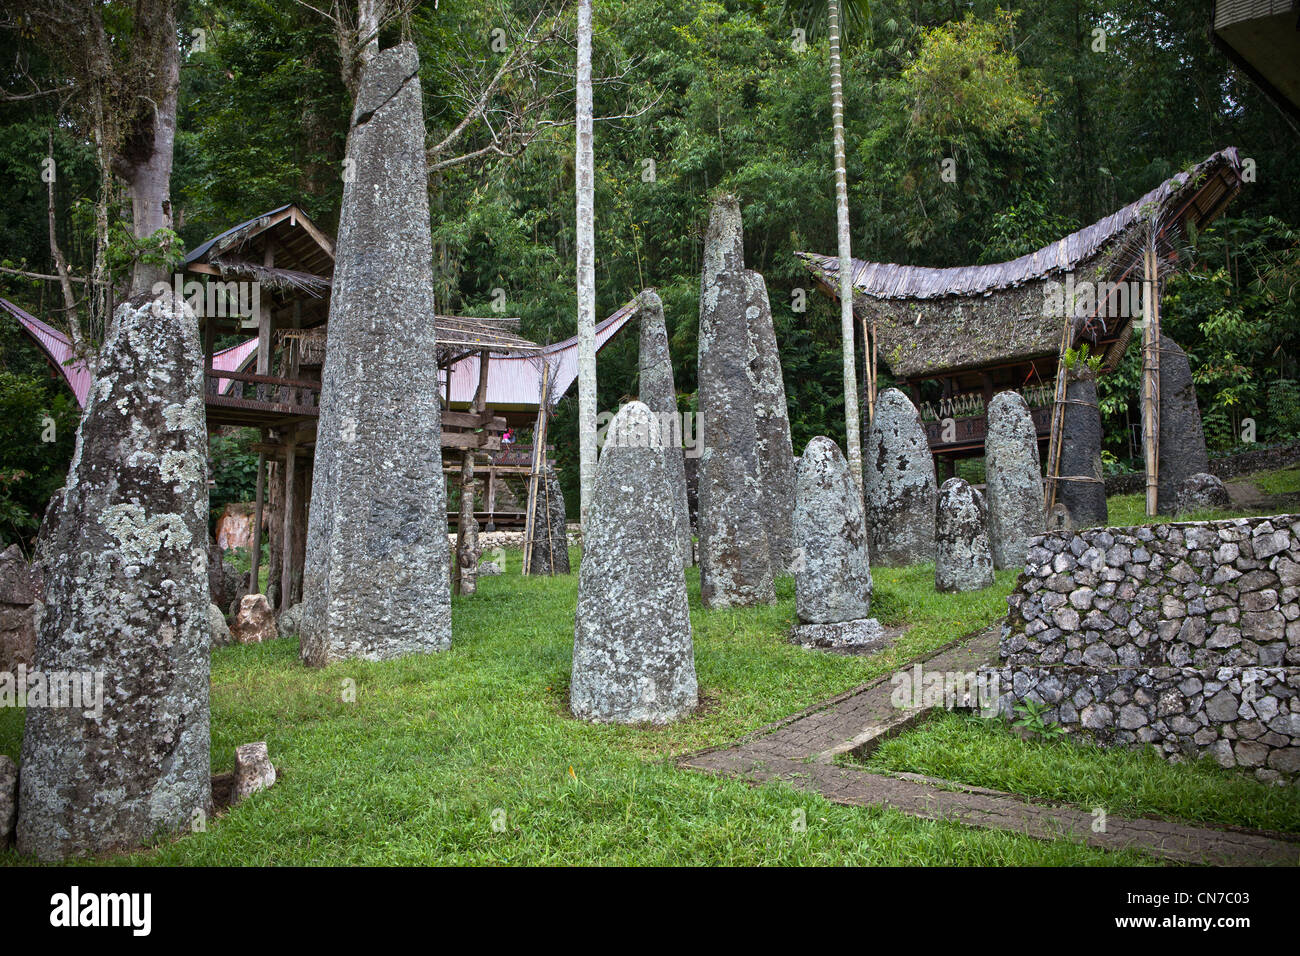 Indonesien, Sulawesi, Tana Toraja Bereich, Bori Dorf Stein Megalith Grabstätte. Stockfoto